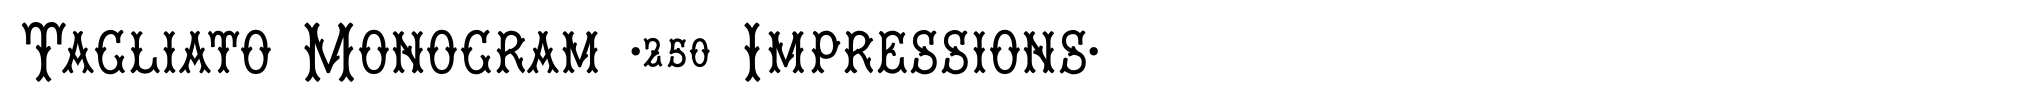 Tagliato Monogram (250 Impressions) image